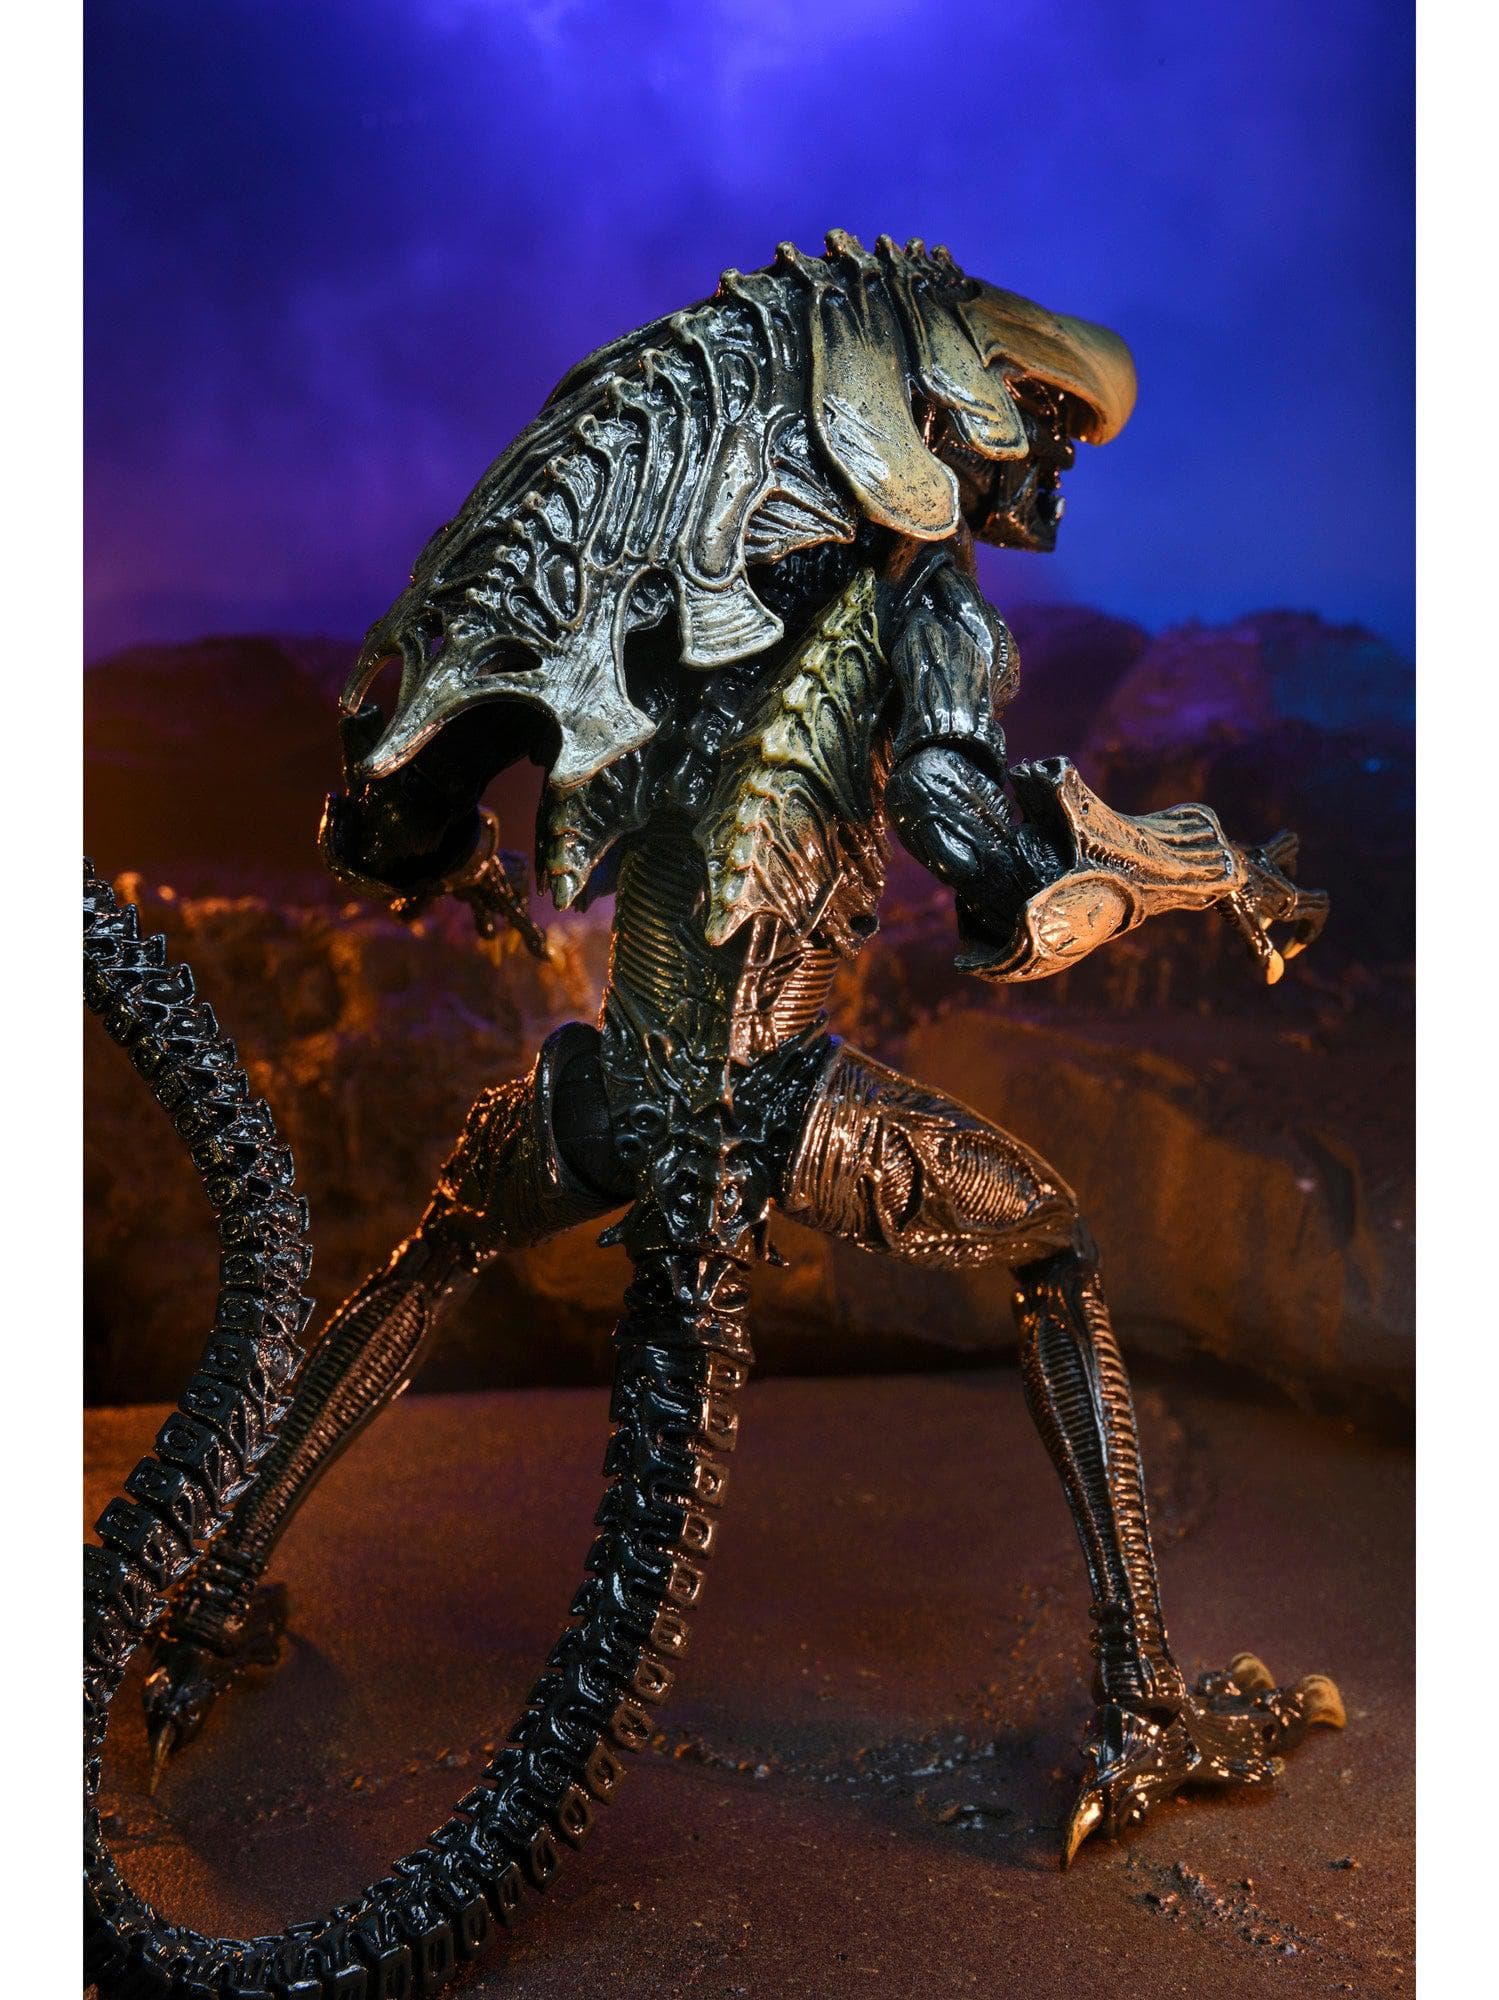 NECA - Alien vs Predator - 7" Scale Action Figure - Chrysalis Alien (Movie Deco) - costumes.com